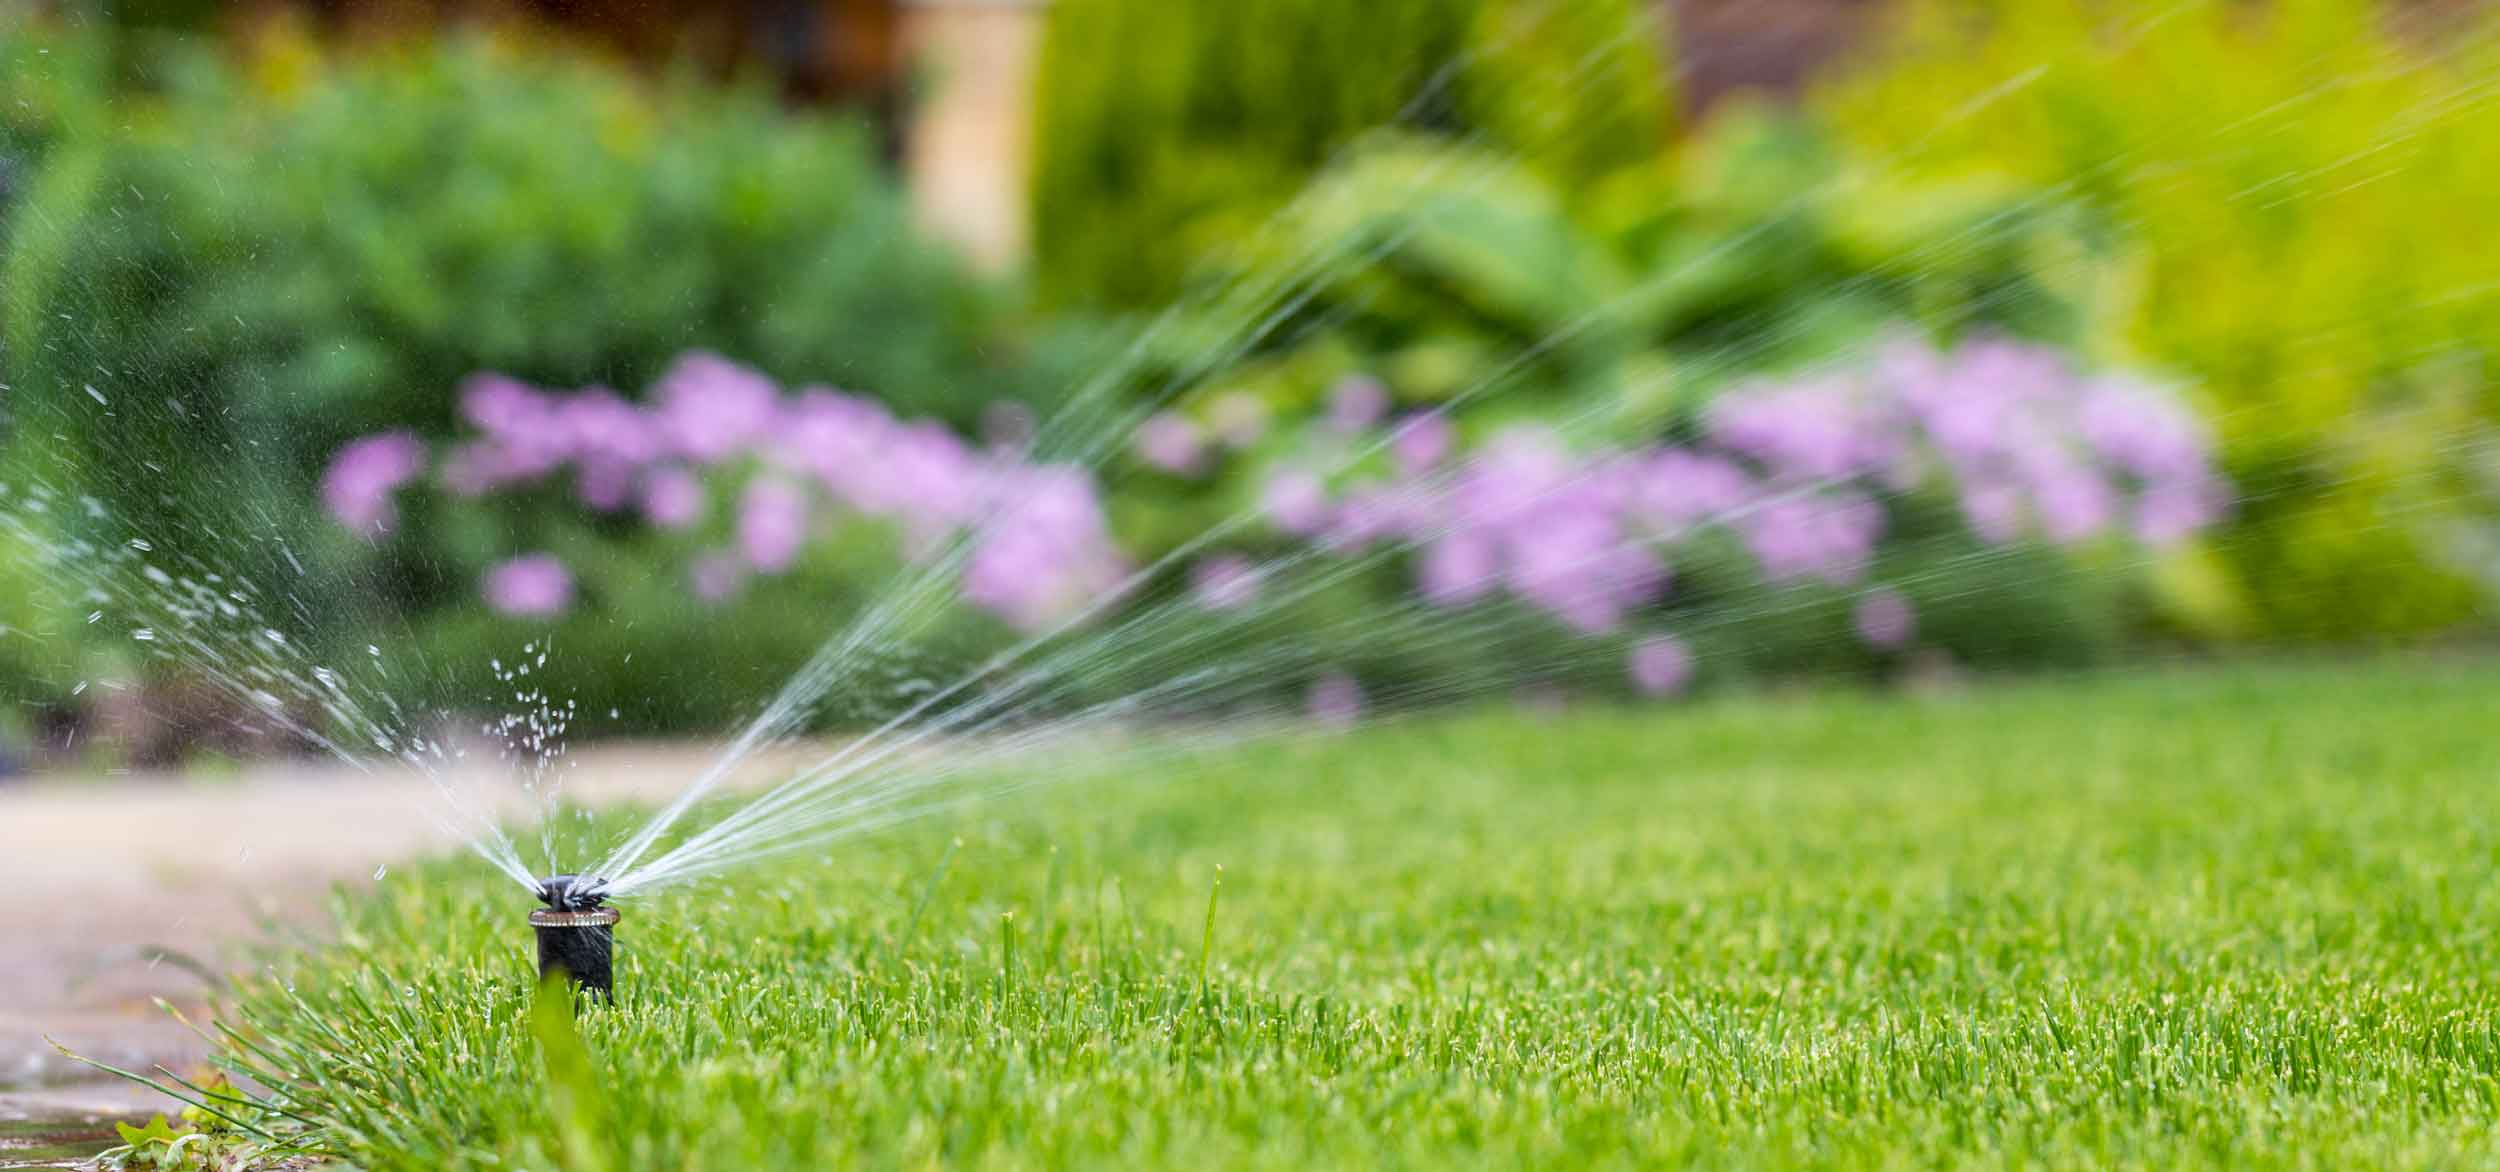 WaterSignal detects irrigation leak for Atlanta senior living community